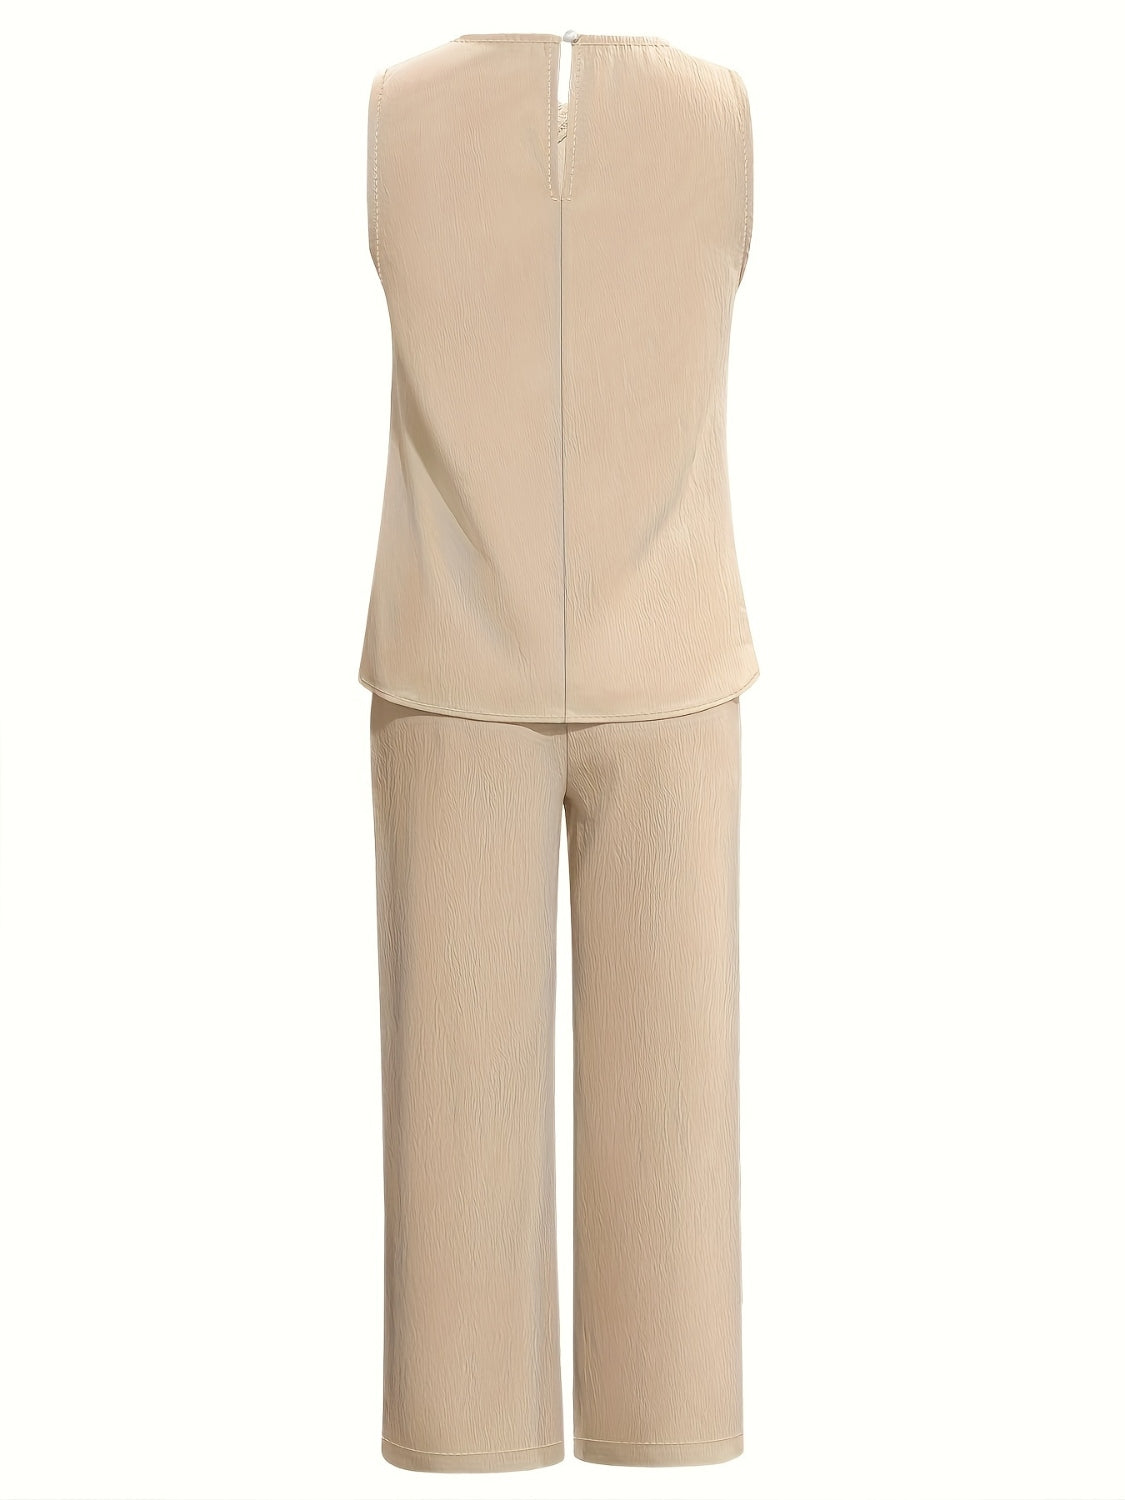 Tan Crisscross Sleeveless Top and Wide Leg Pants Set Sentient Beauty Fashions Apparel & Accessories